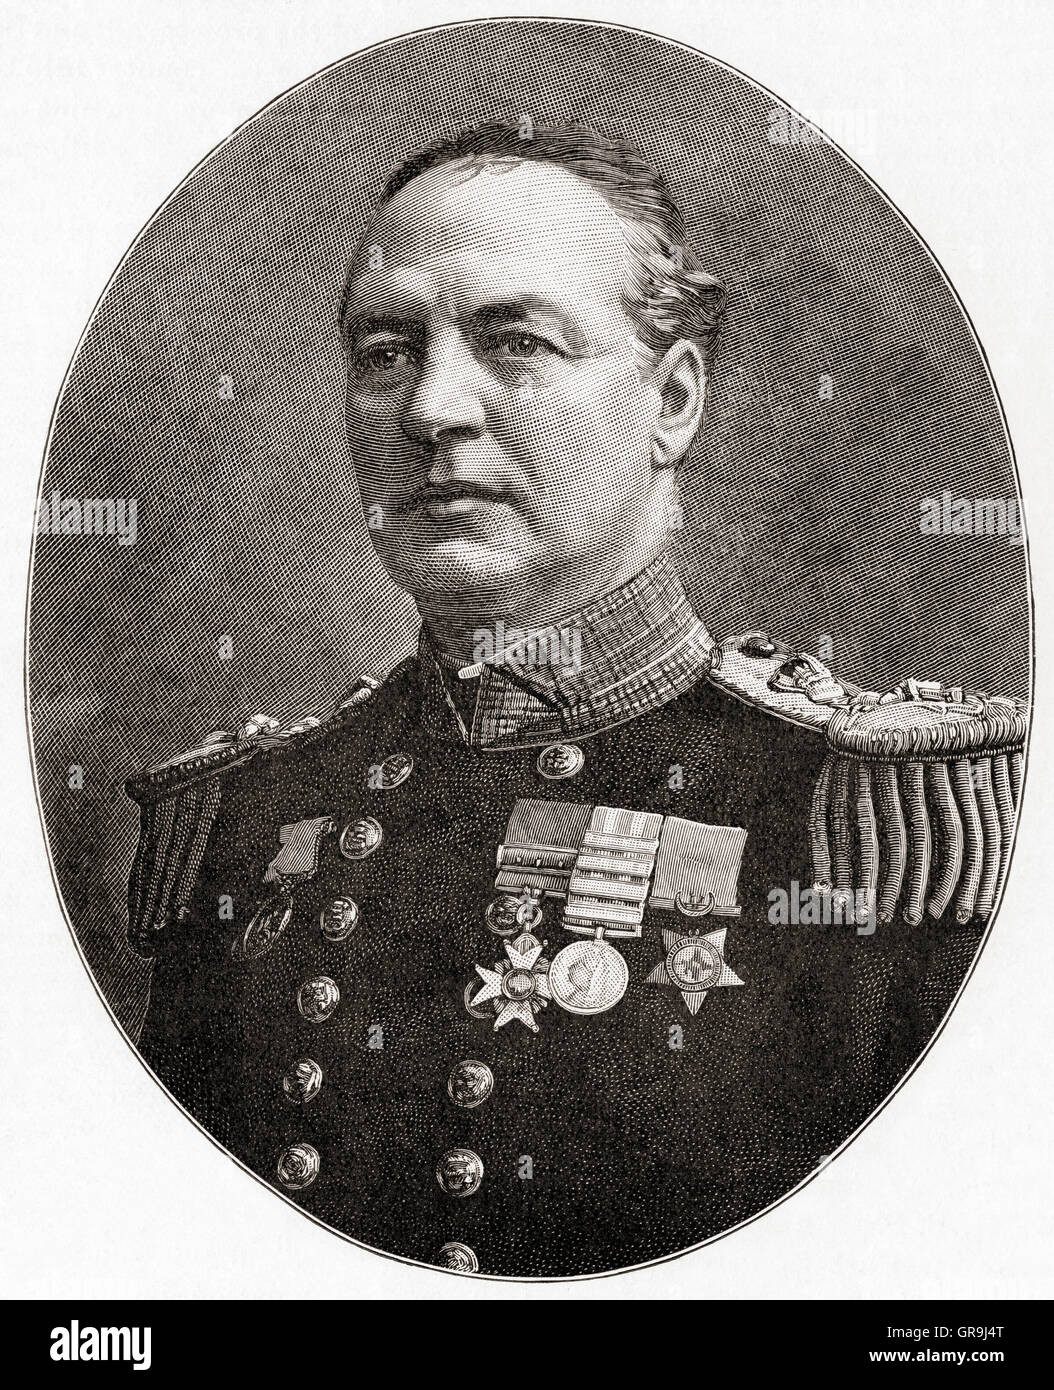 Charles William de la Poer Beresford, 1st Baron Beresford, 1846 – 1919, aka Lord Charles Beresford.  British admiral and Member of Parliament. Stock Photo